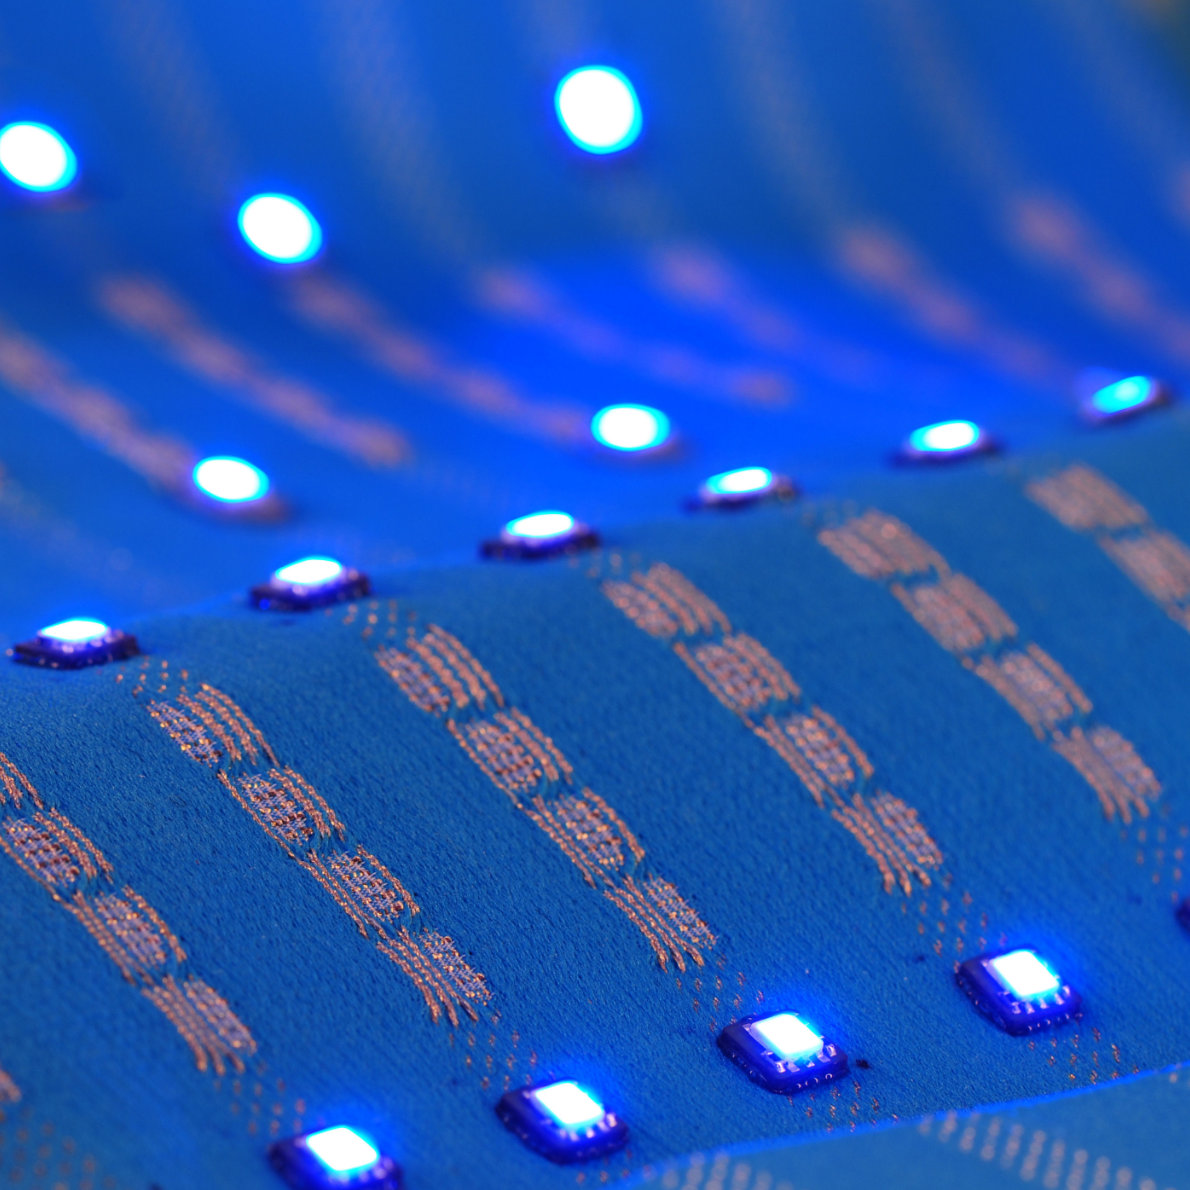 Electronic textiles technologies